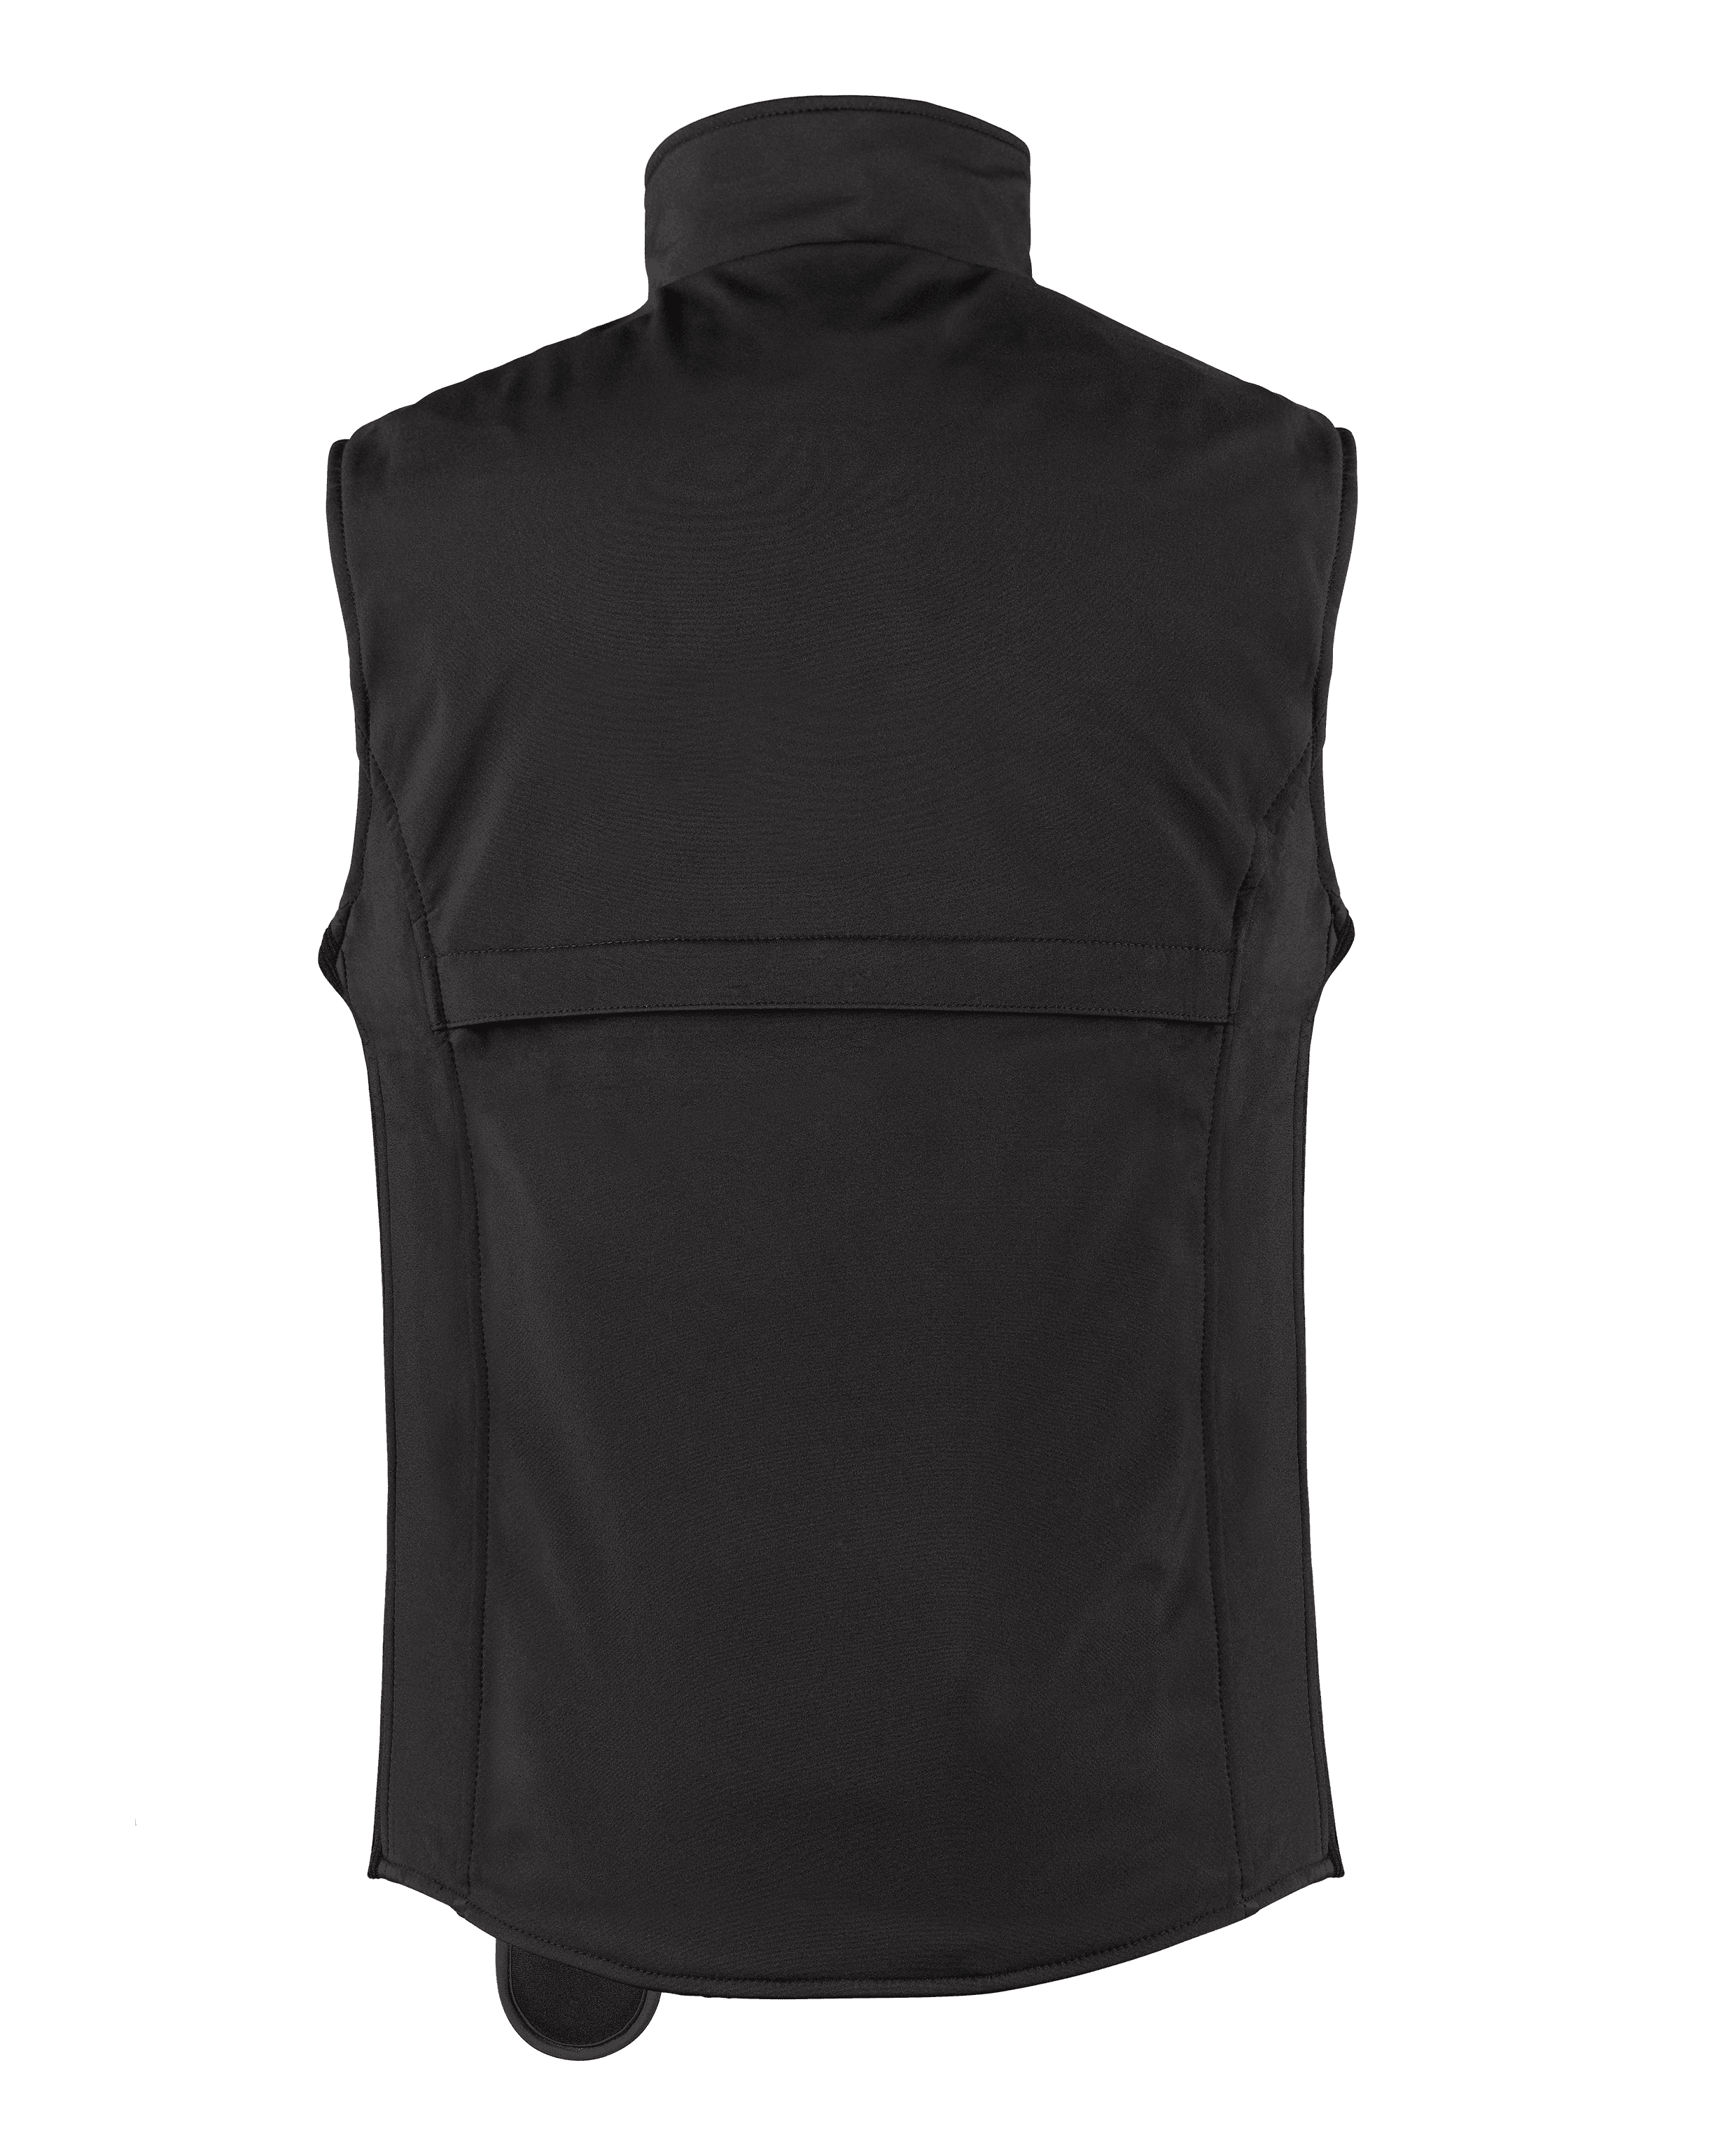 PRO+ Heated Vest for Men (Open Box)